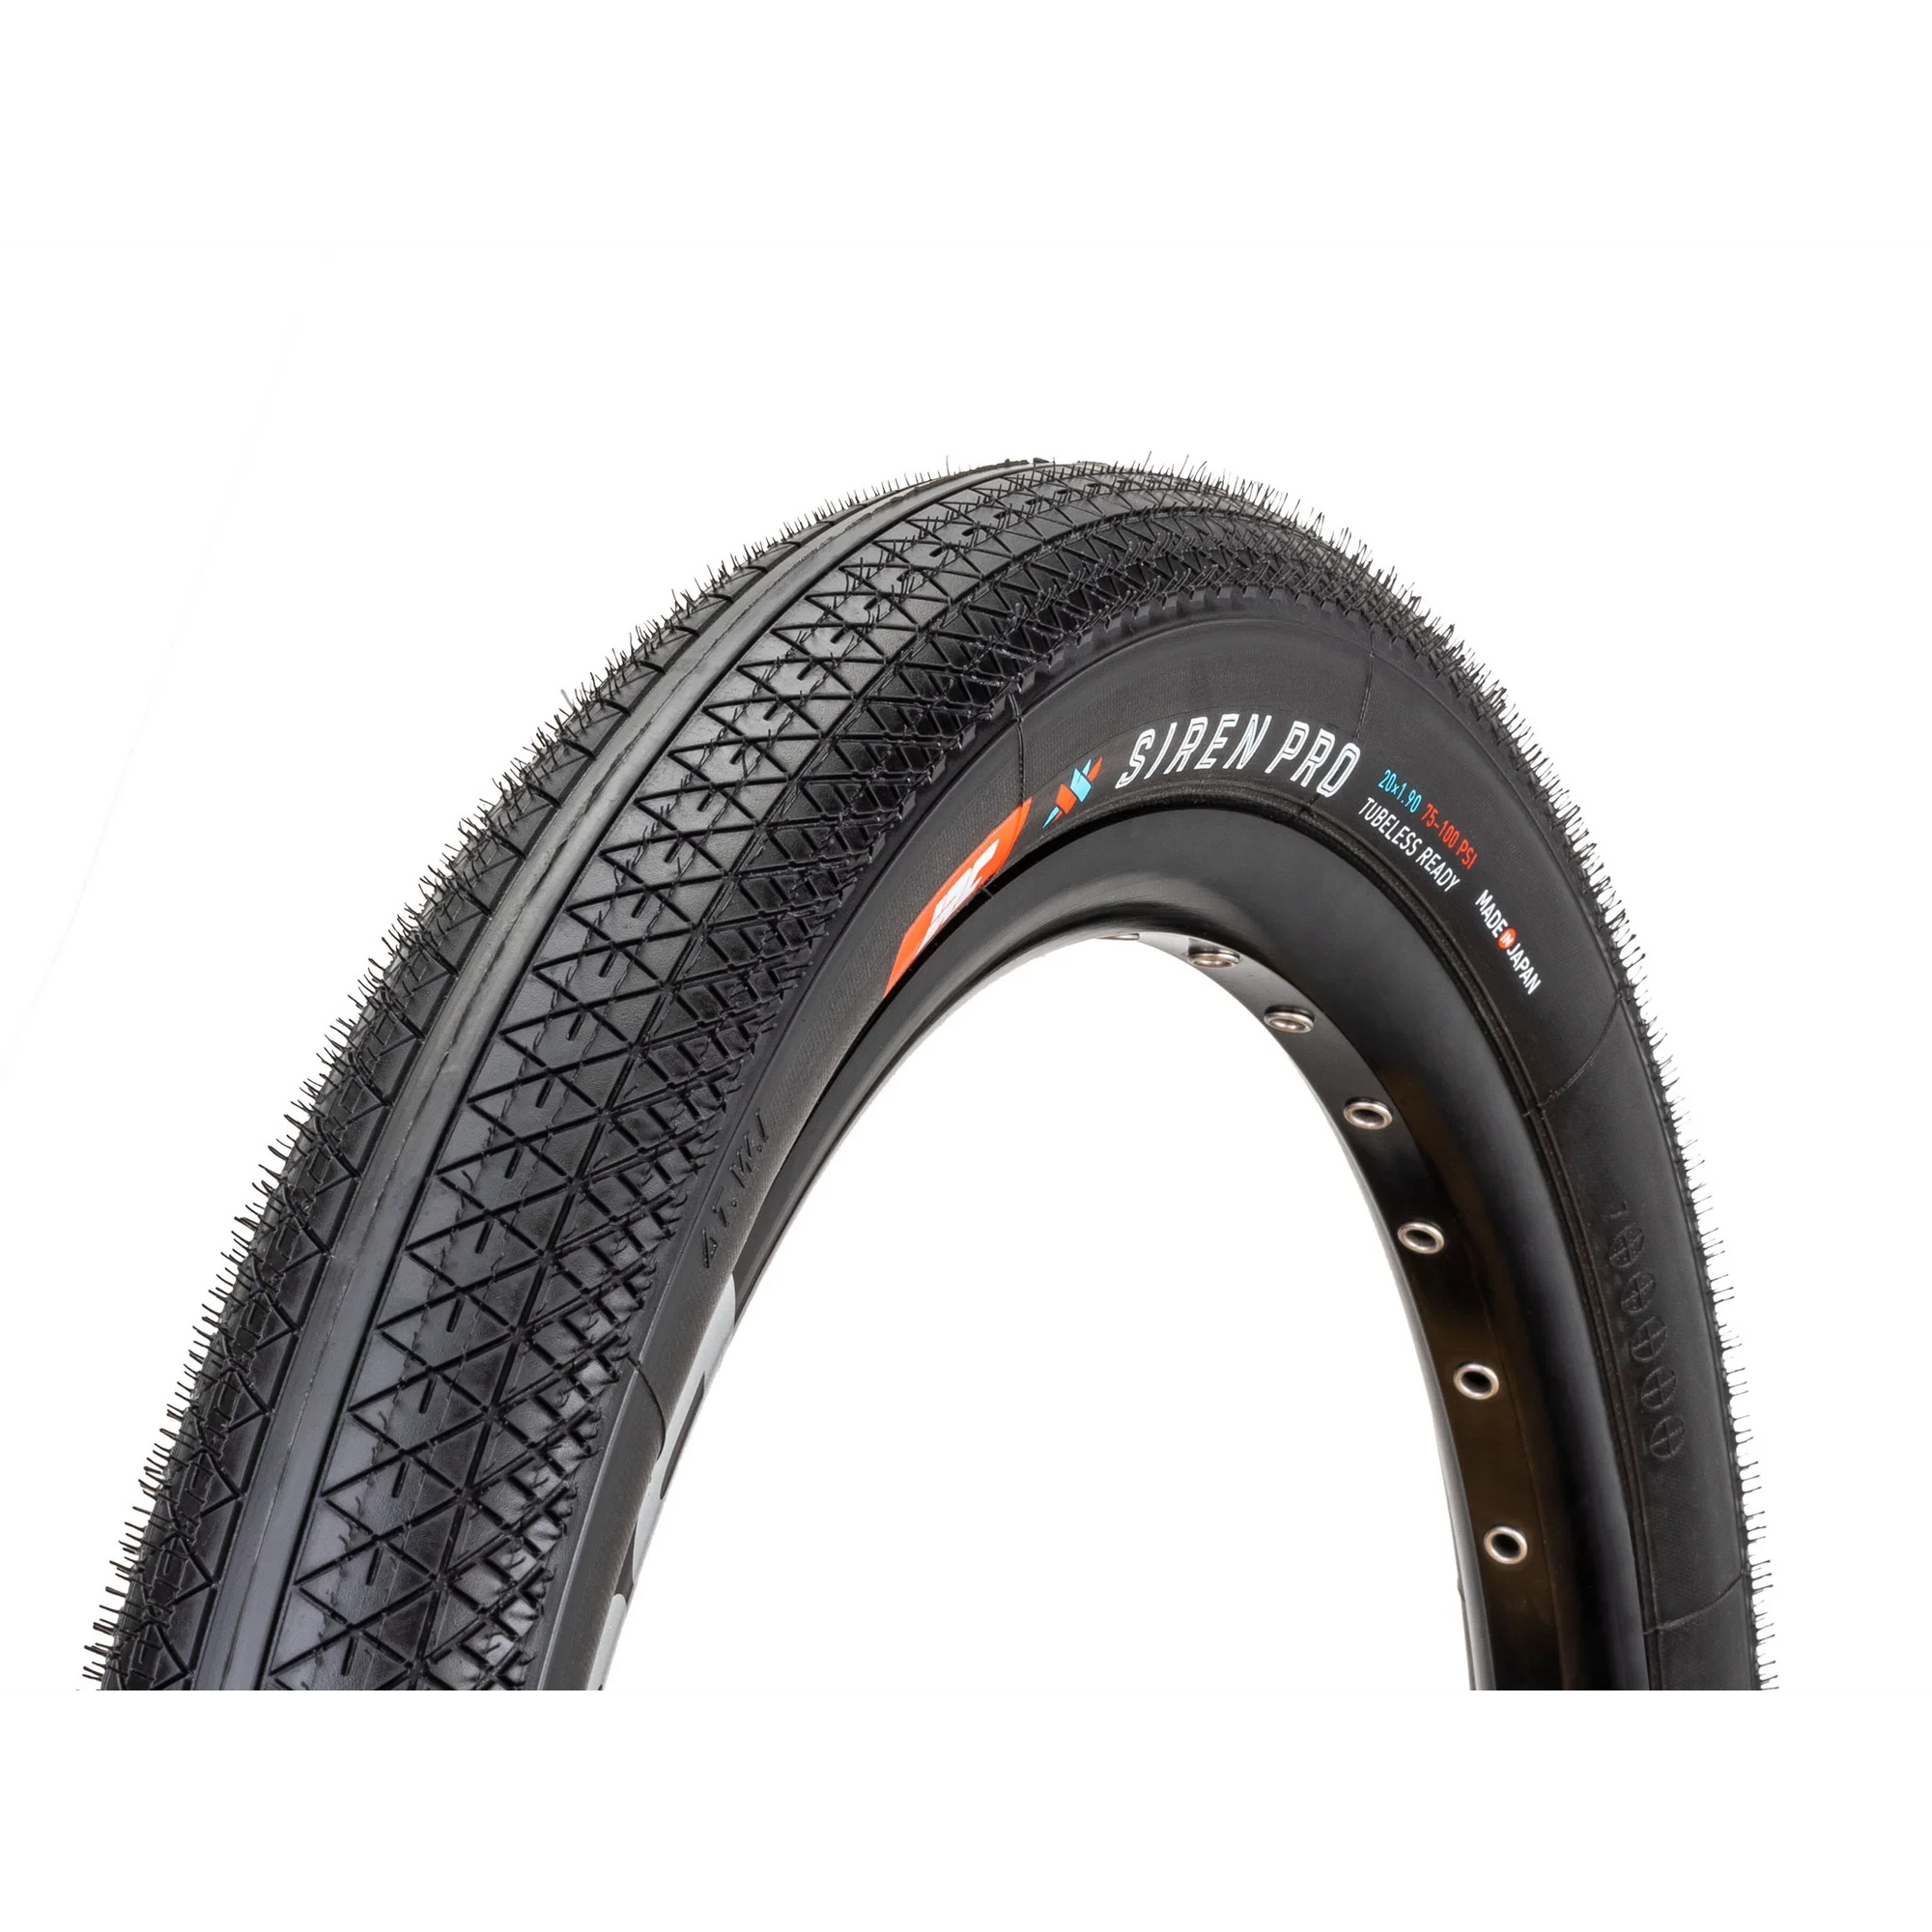 20x1.90 IRC Siren Pro Tubeless Ready BMX Race Tire - 100psi - Black